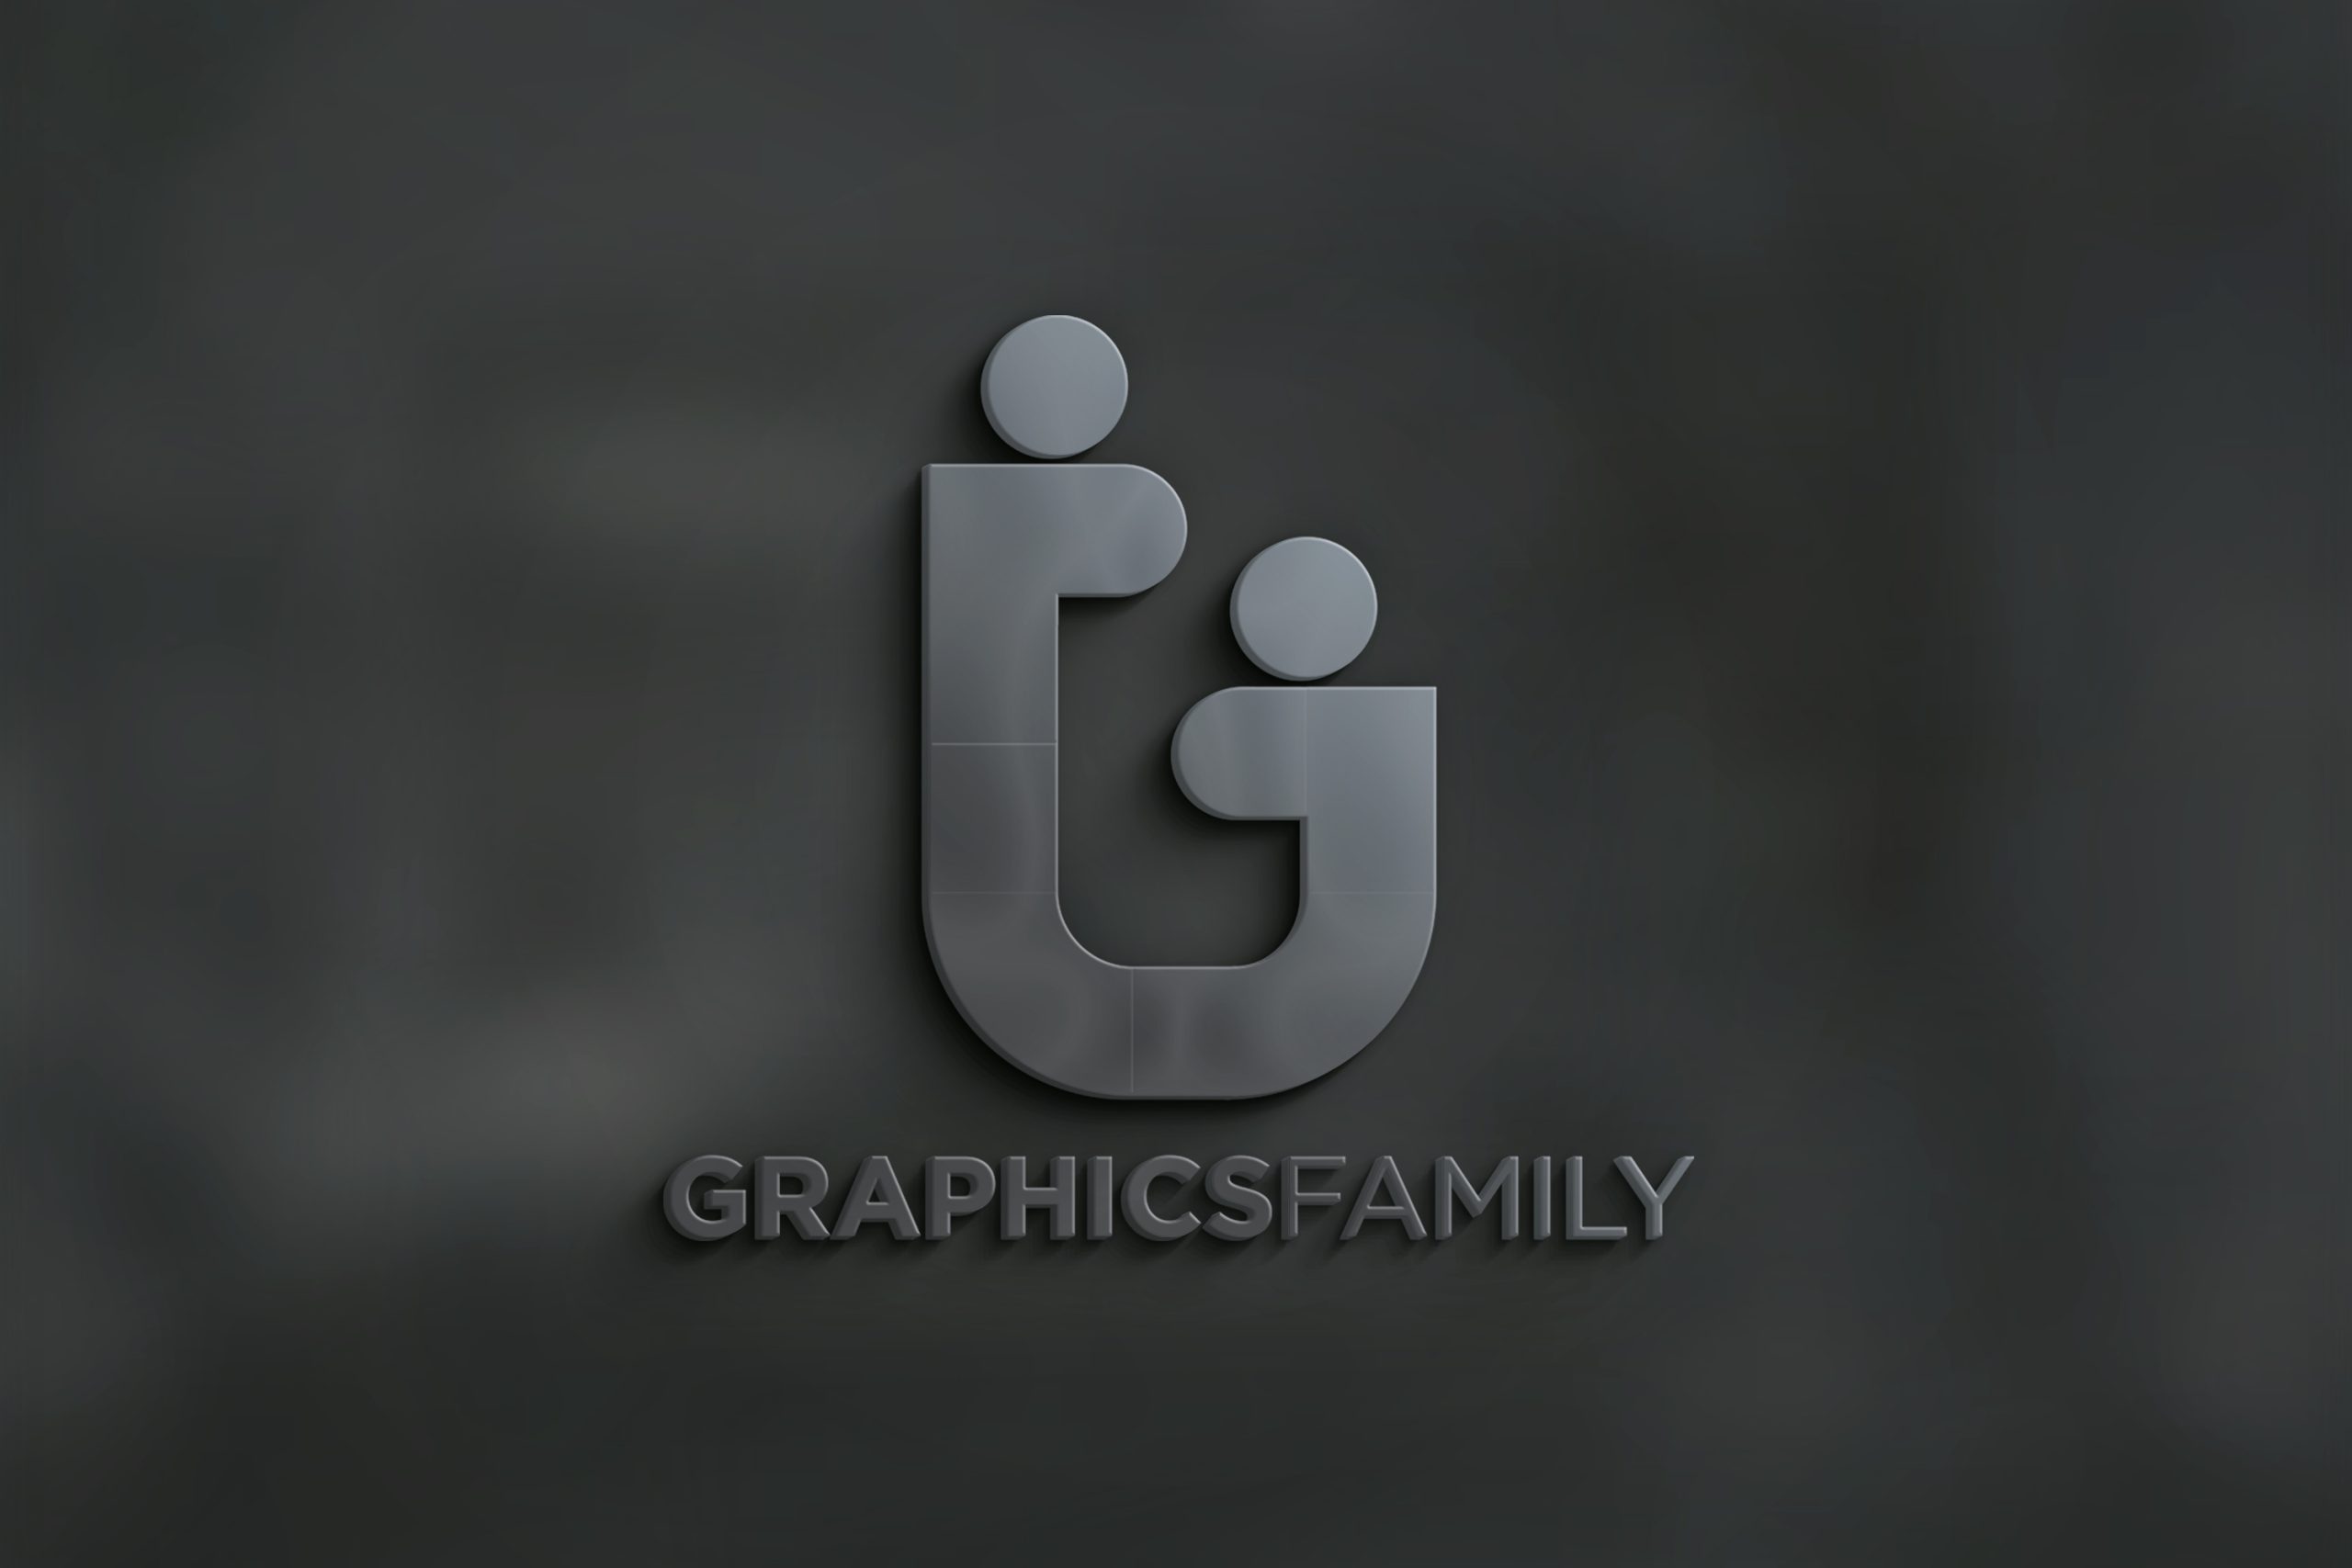 Photorealistic 3D logo mockup on dark background